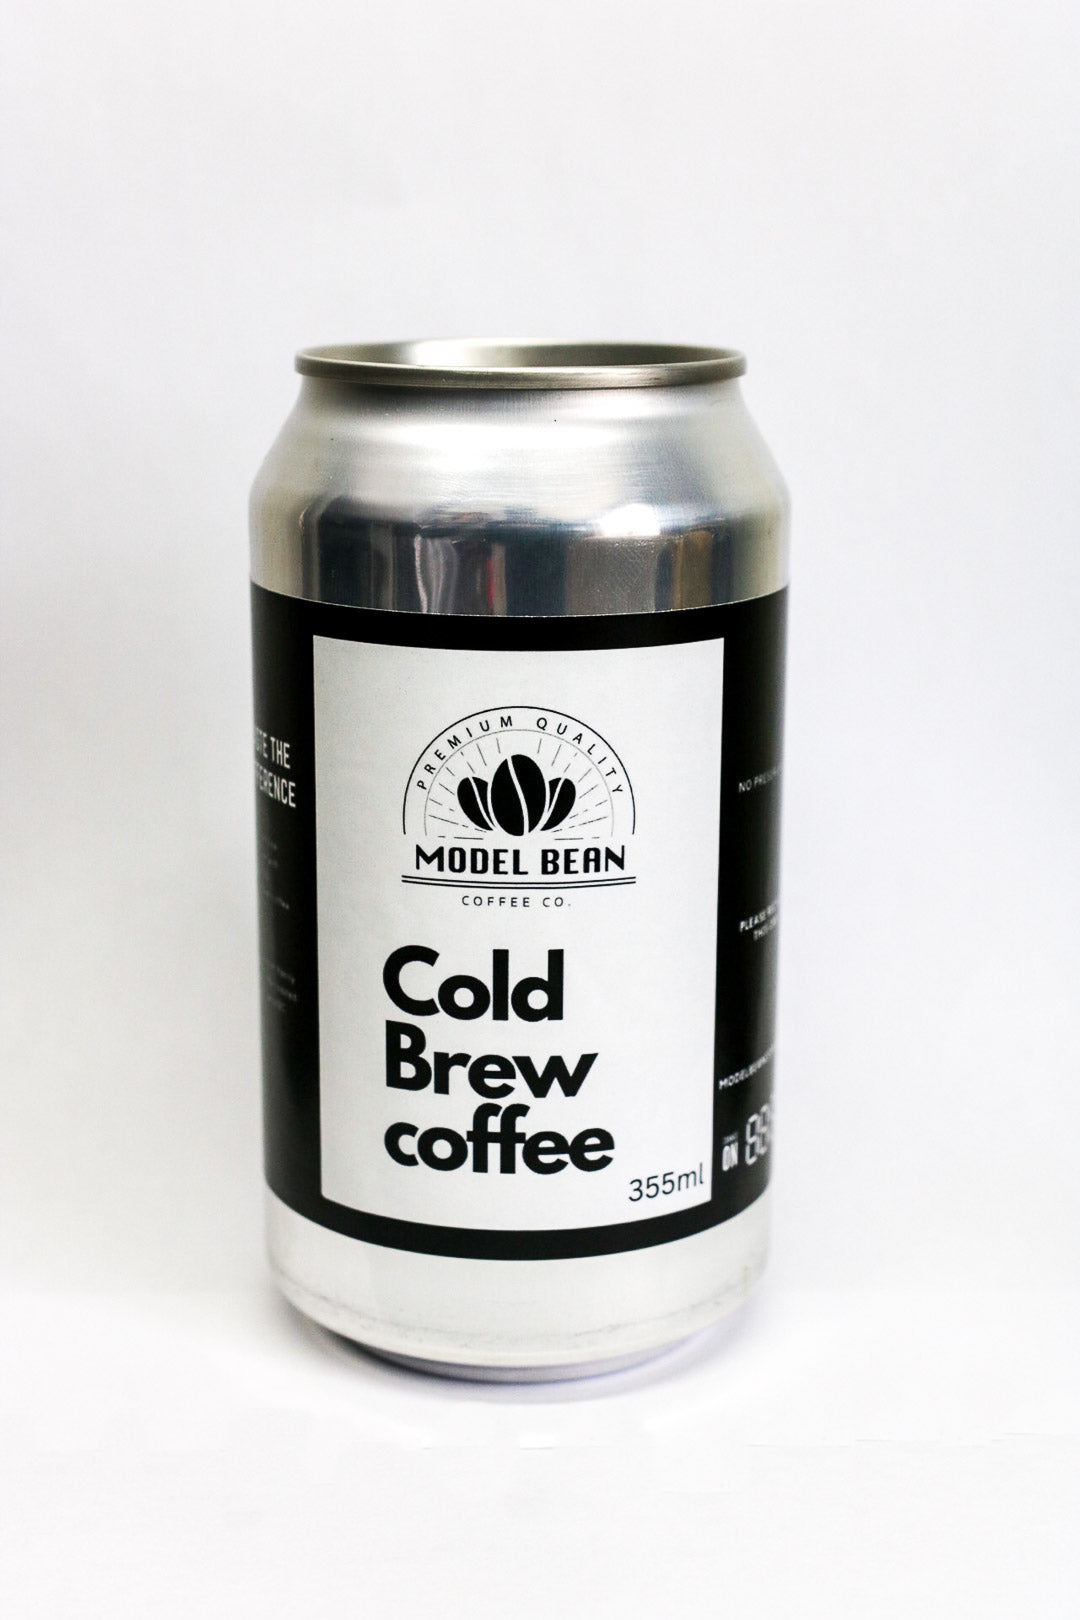 Cold Brew Coffee made from Model Bean Coffee light-medium roast, kelowna BC, Canada